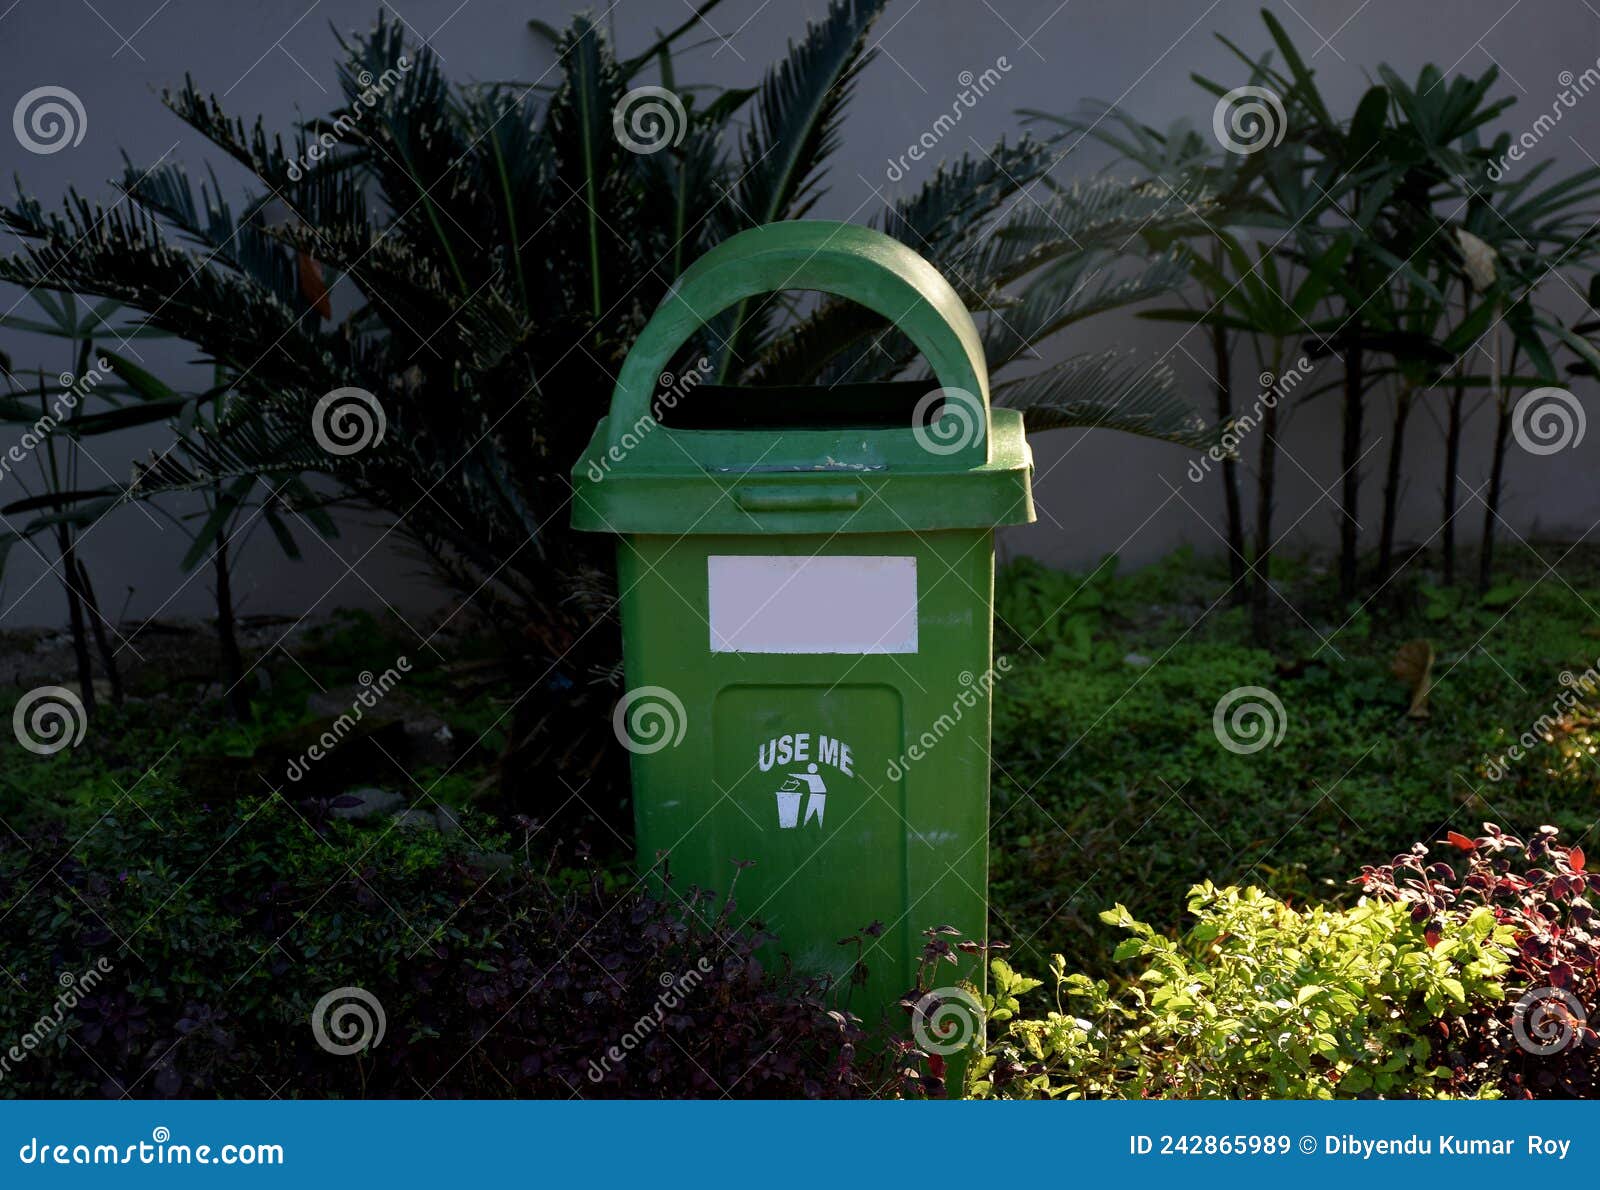 dustbin or bin at a park